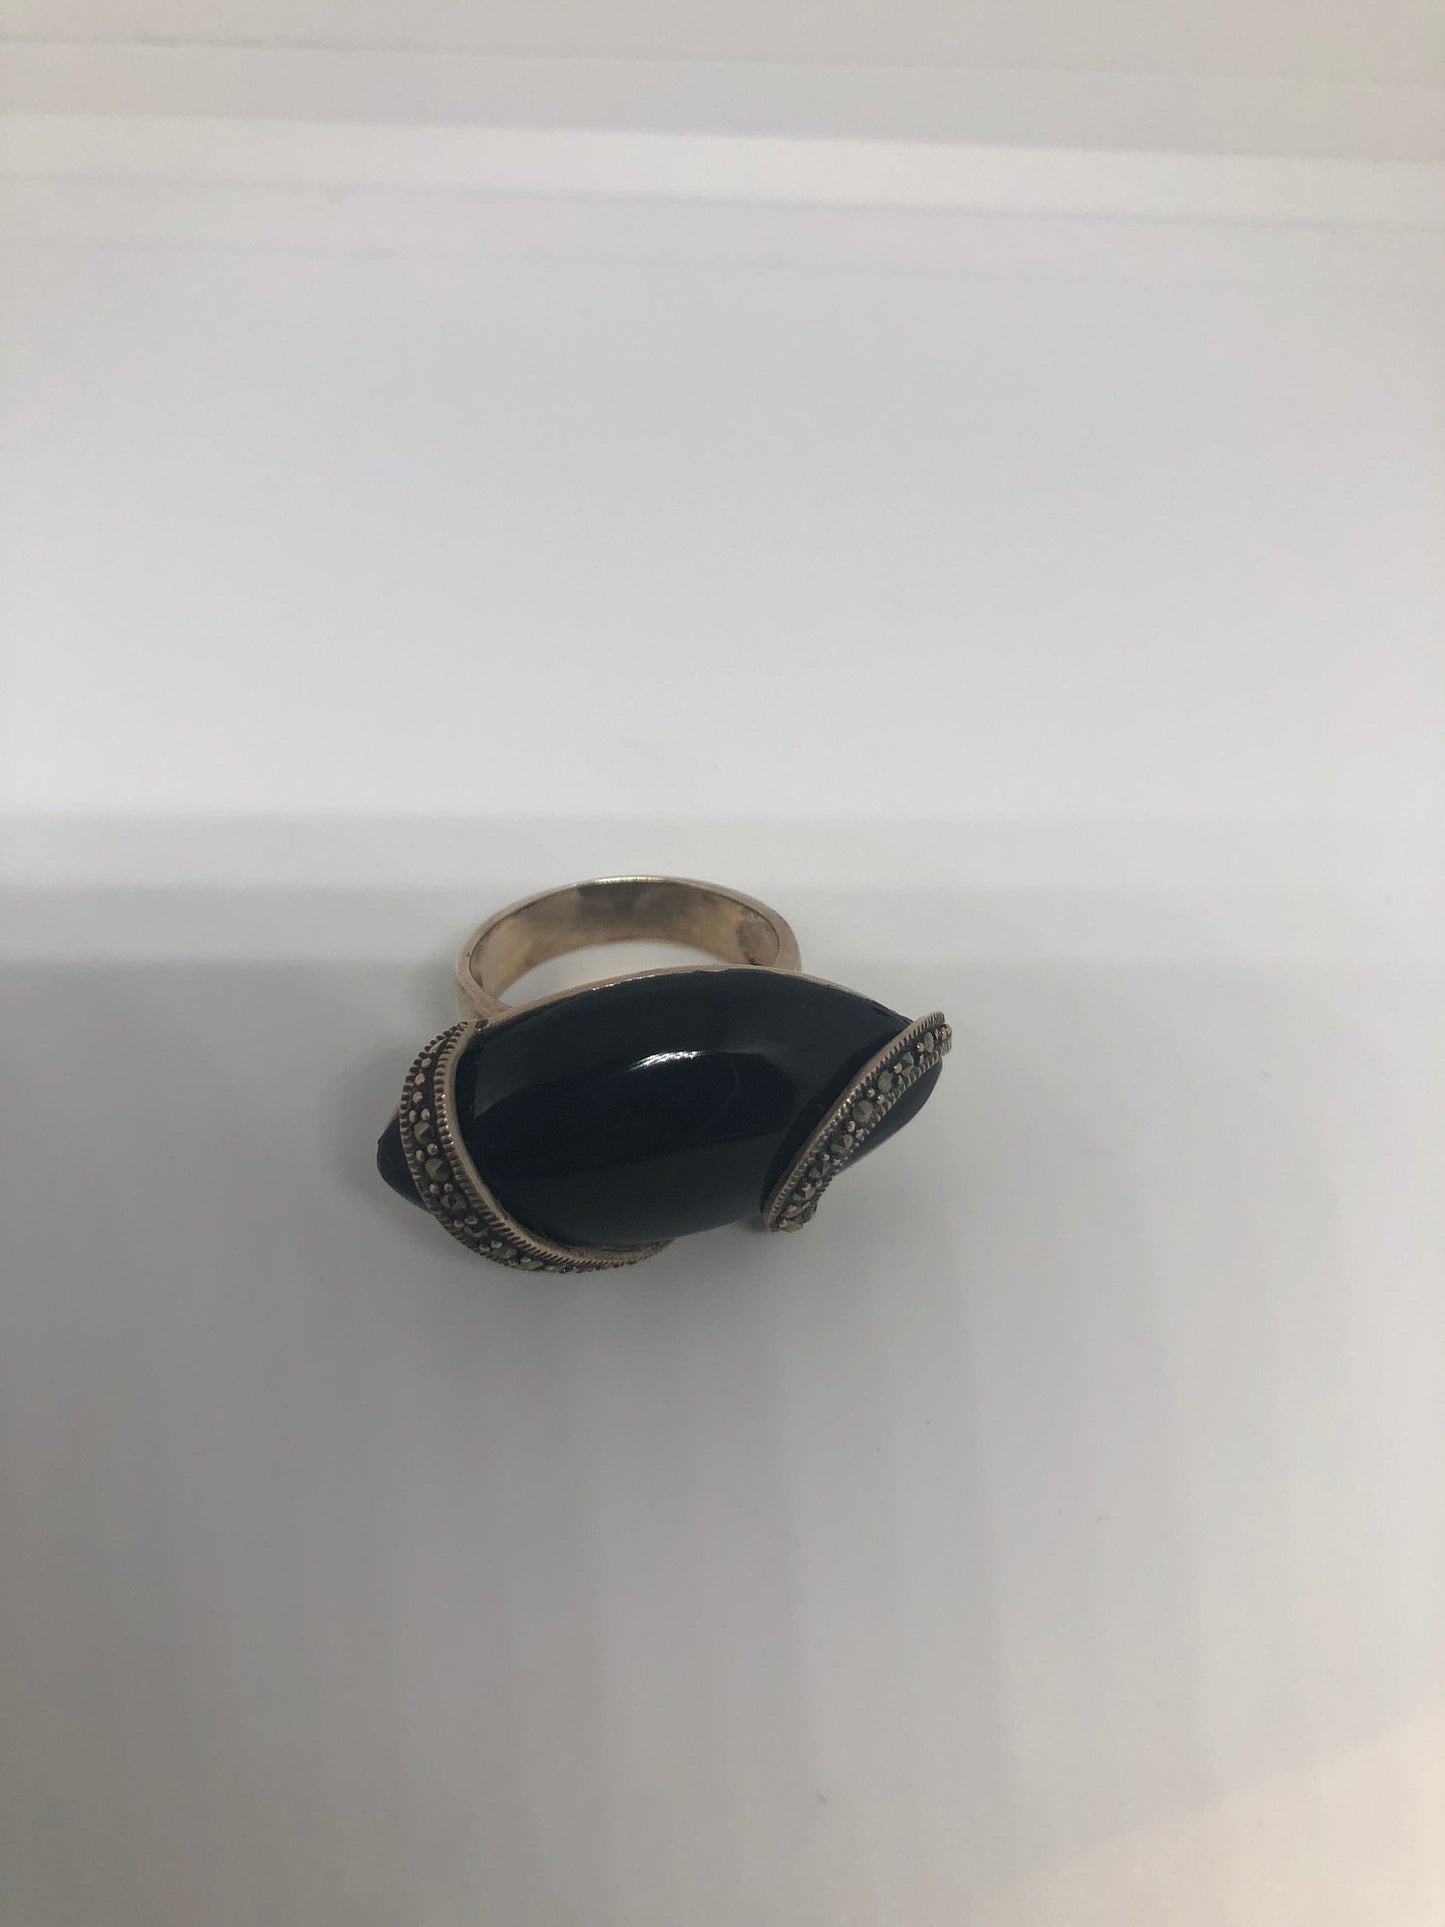 Vintage Genuine Black Onyx Silver Marcasite Ring